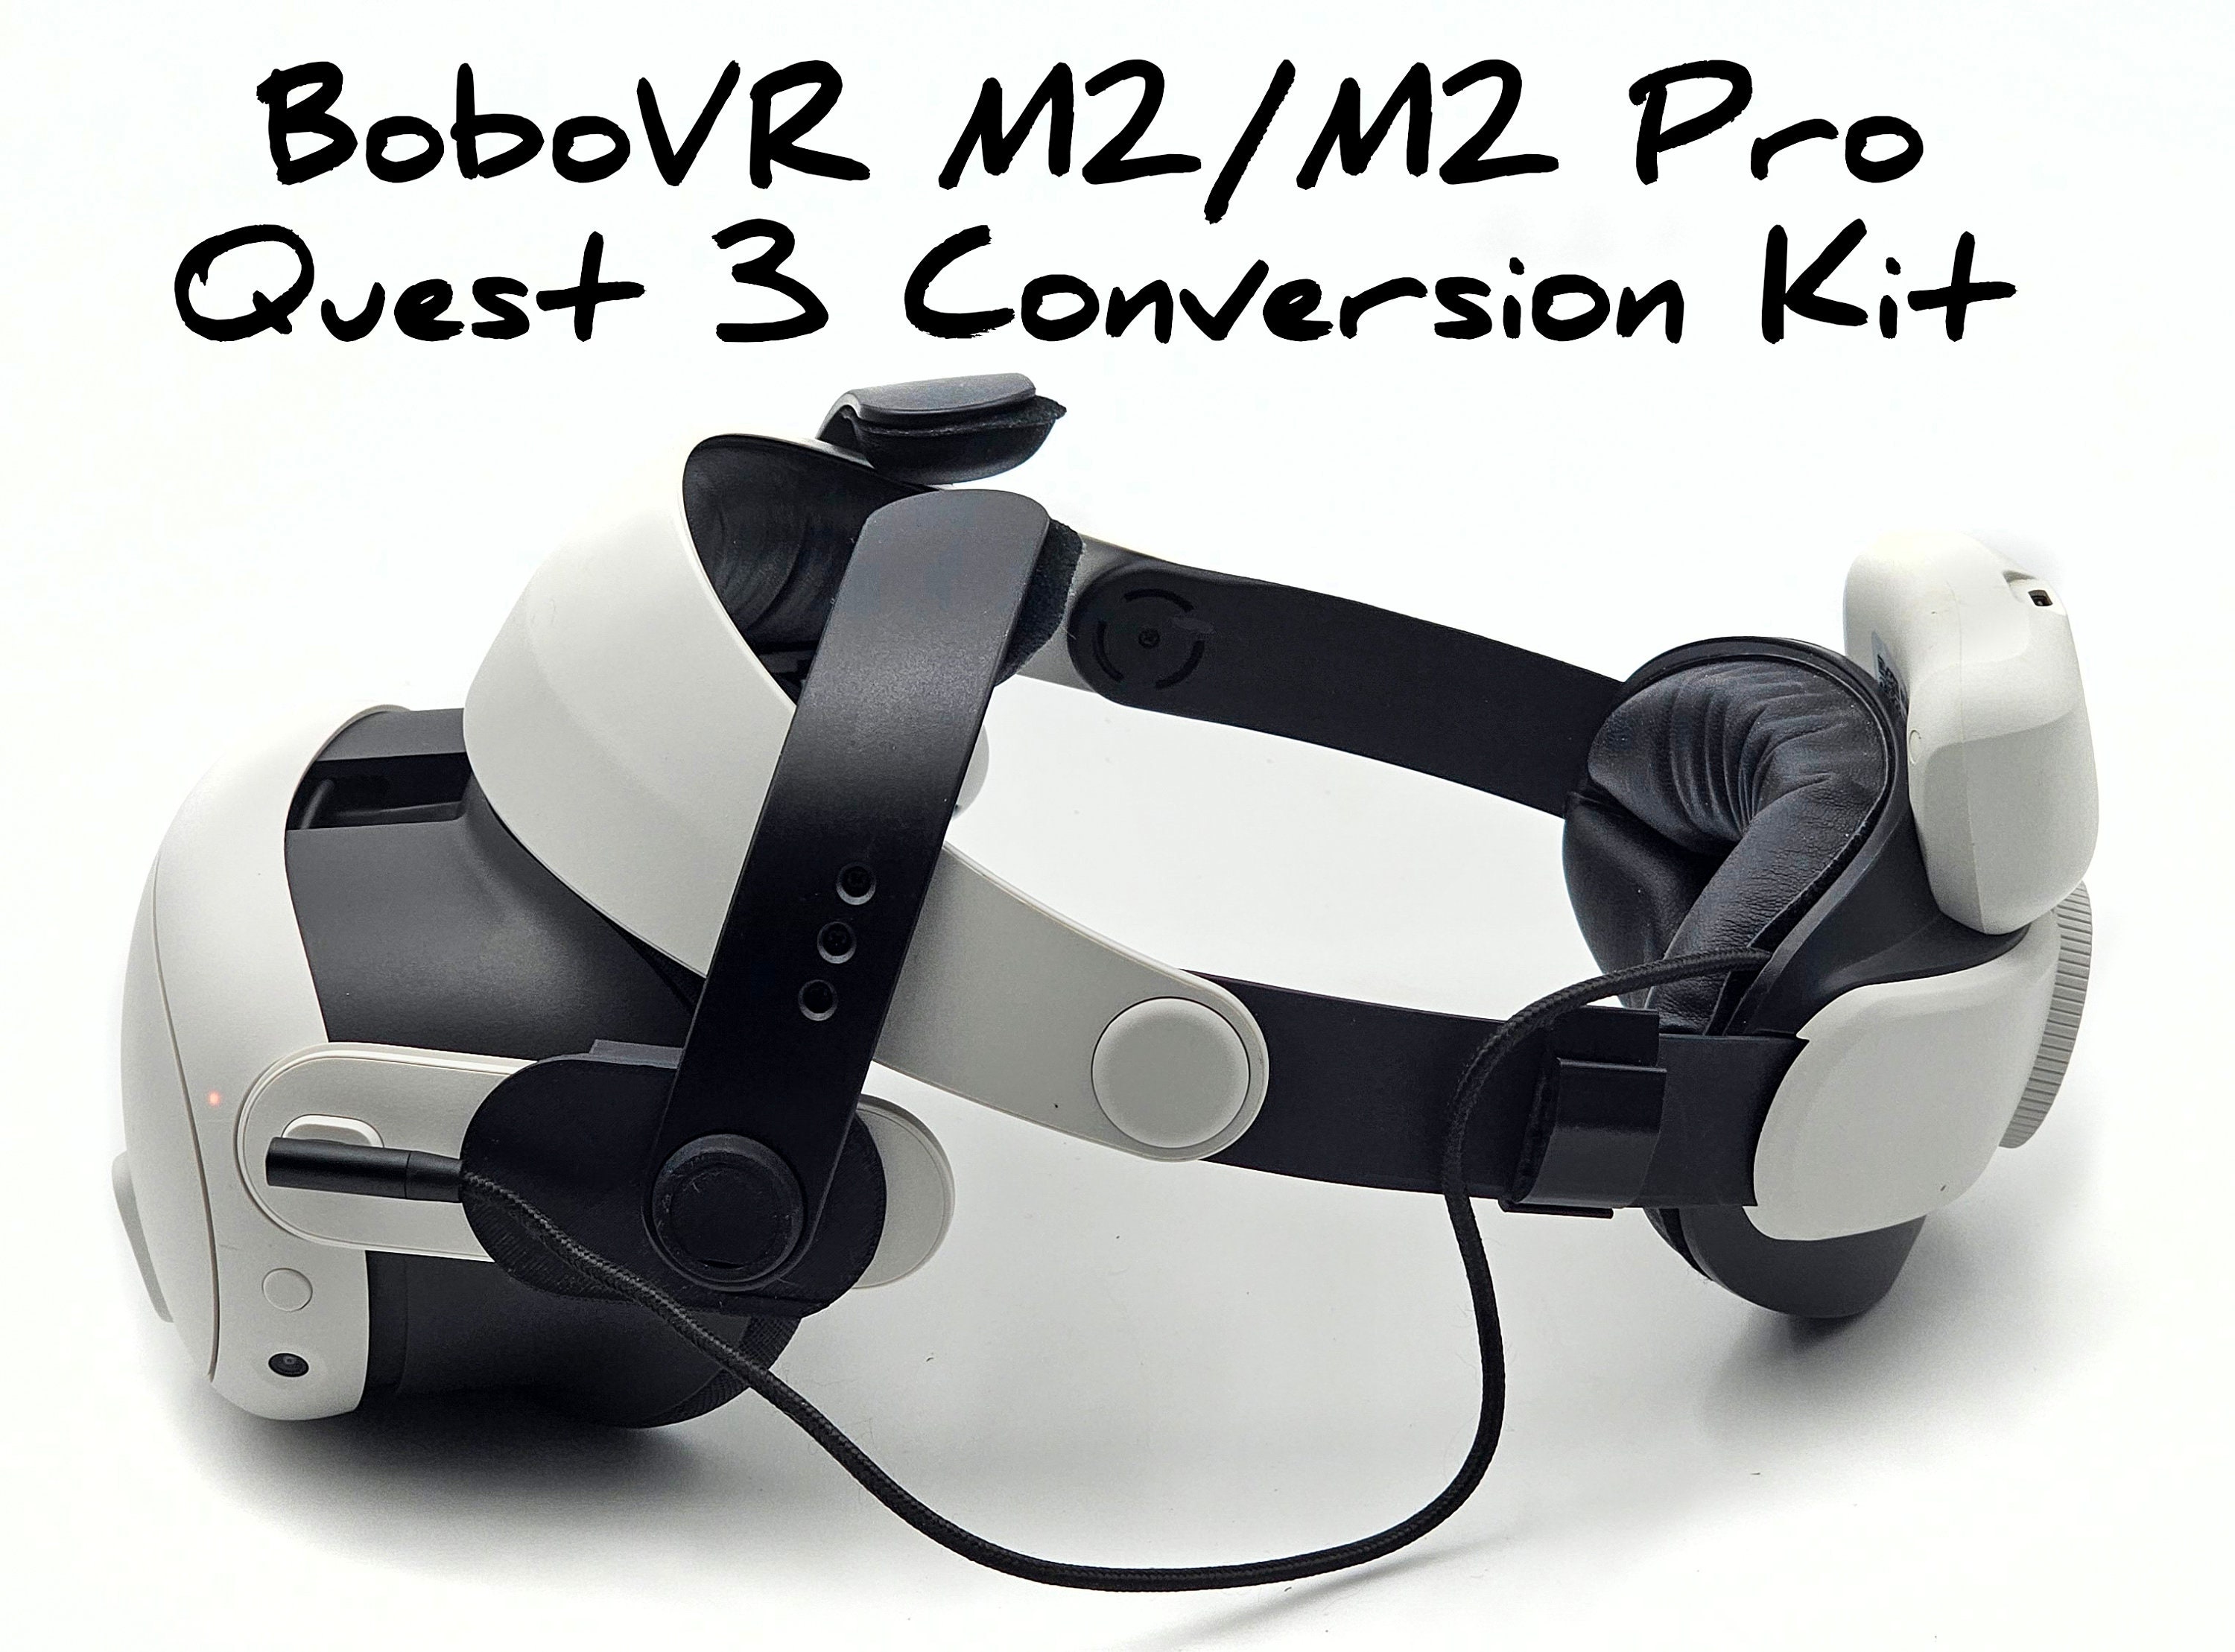 Quest 3 Bobovr M2 / M2 Pro Conversion Kit Use Your Old Bobovr M2 Halo Strap  on Your Quest 3 